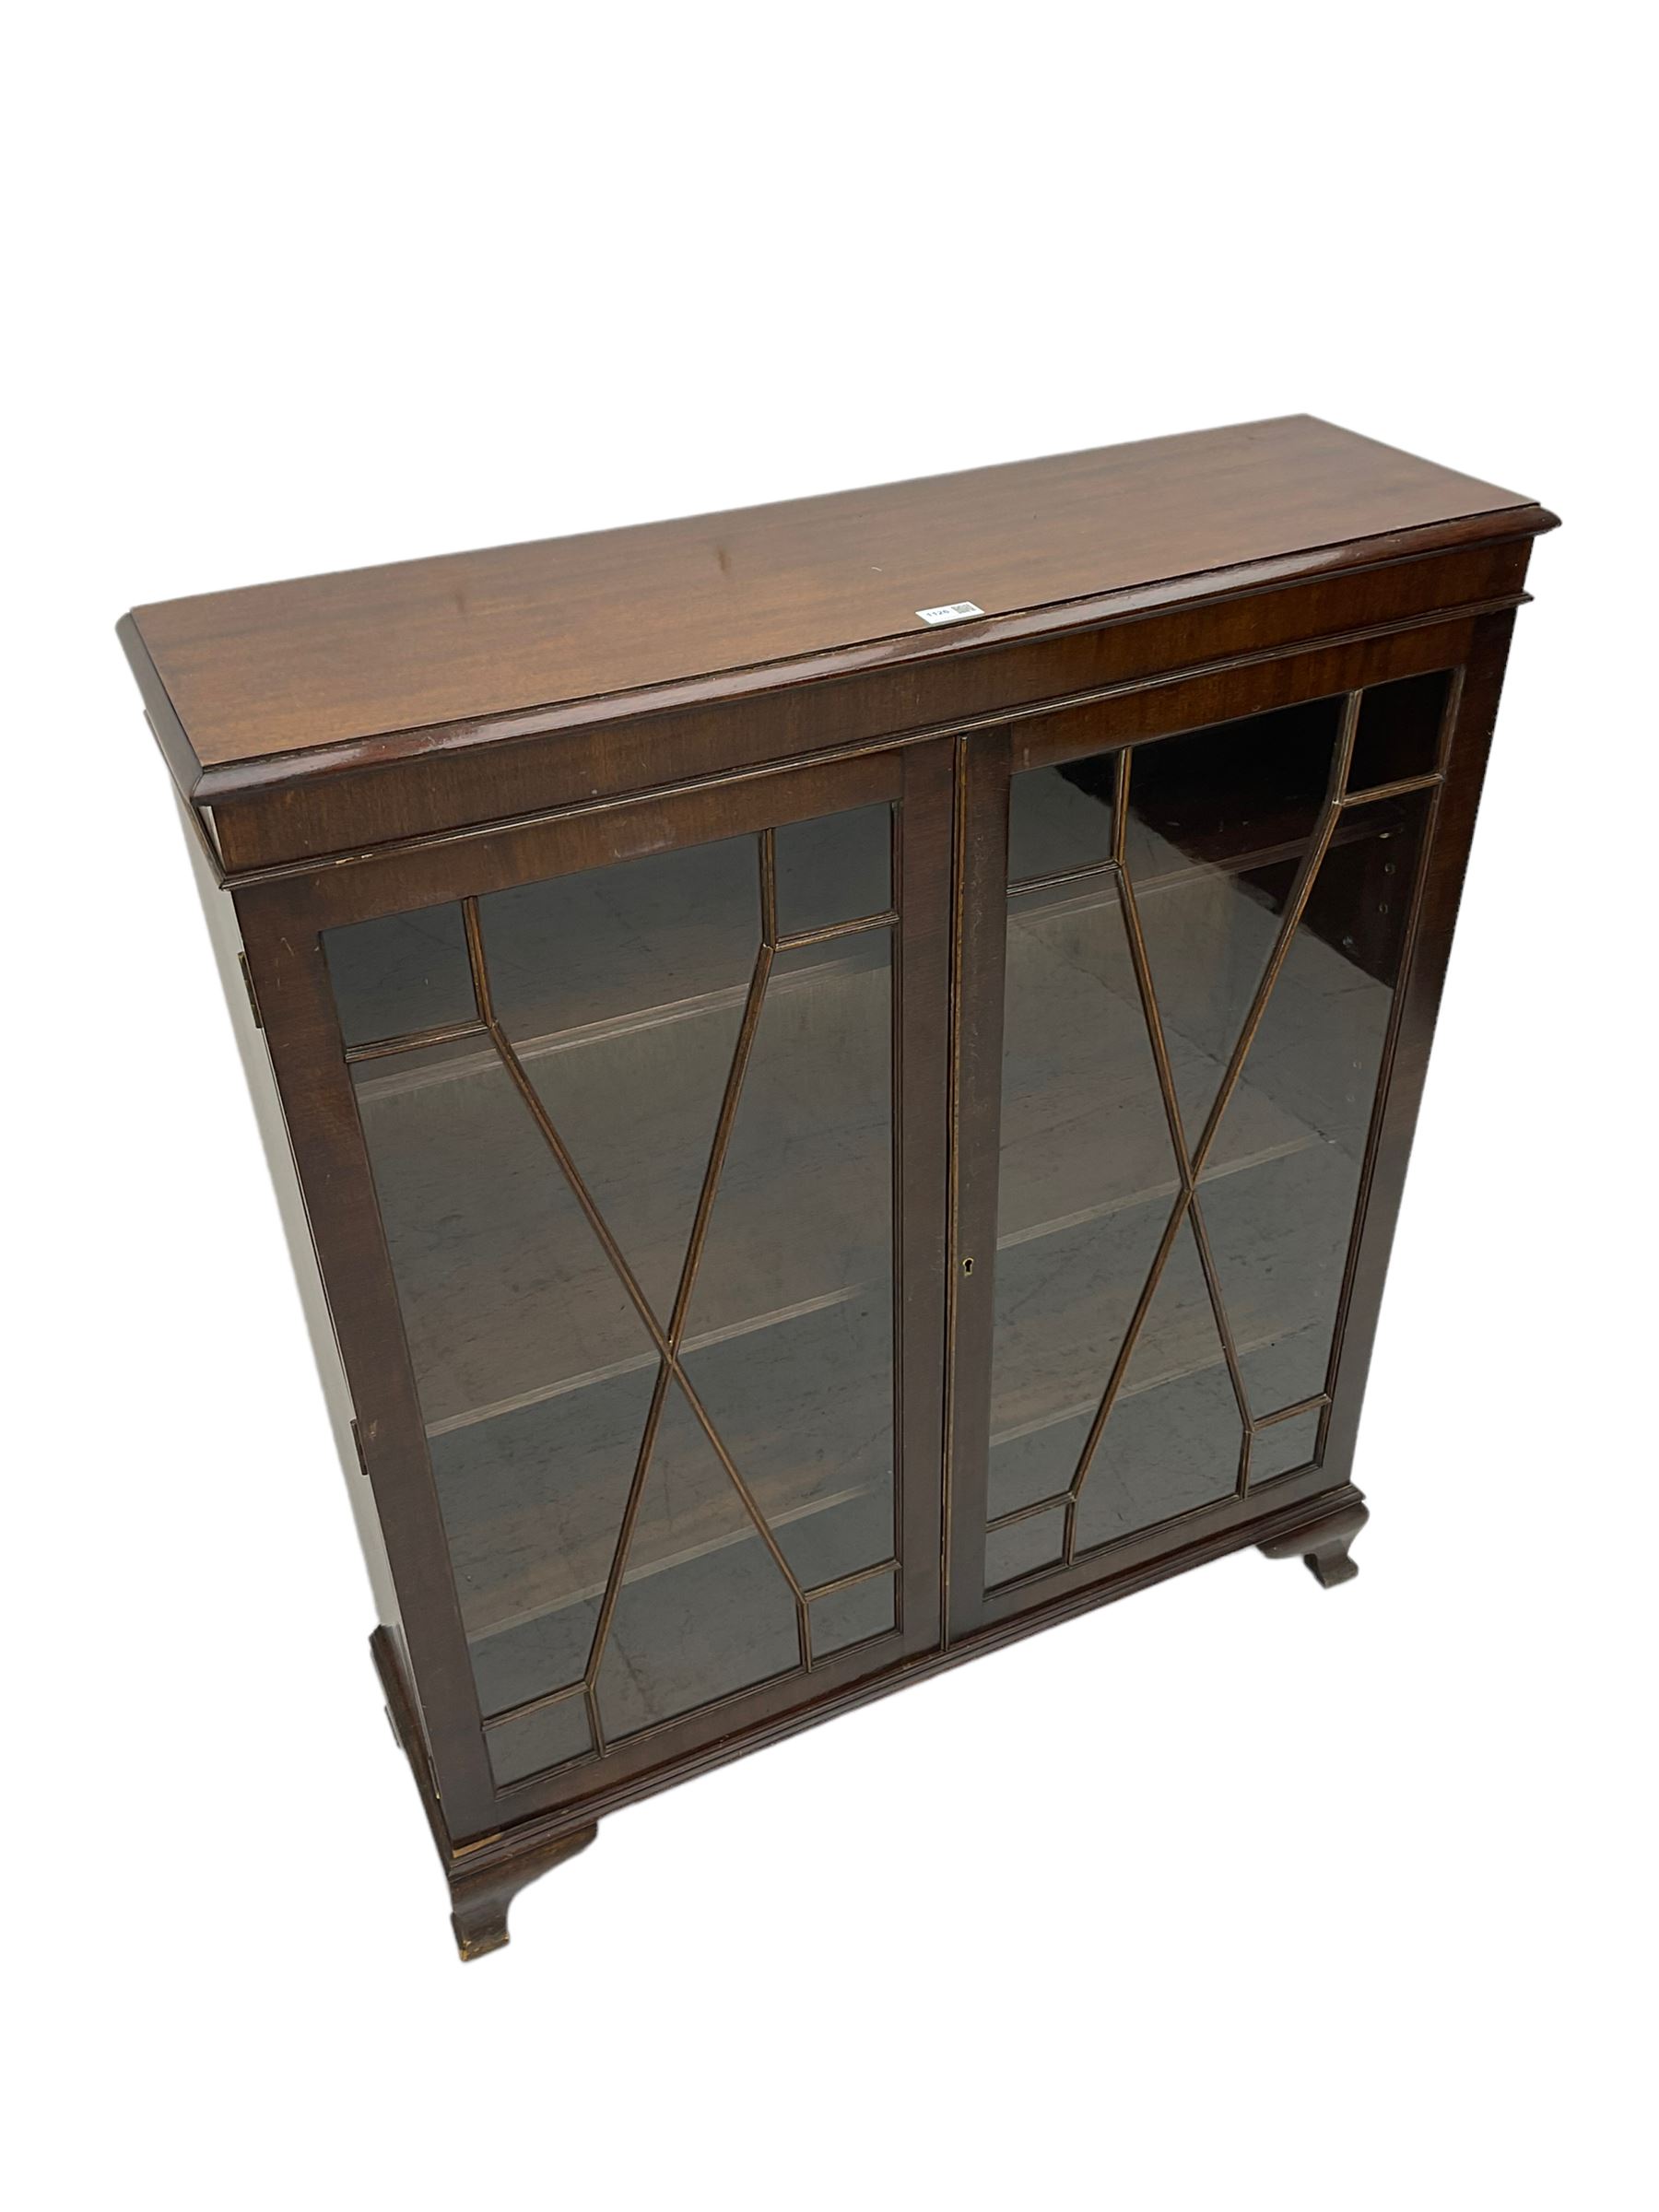 Early 20th century mahogany glazed display cabinet - Image 4 of 6